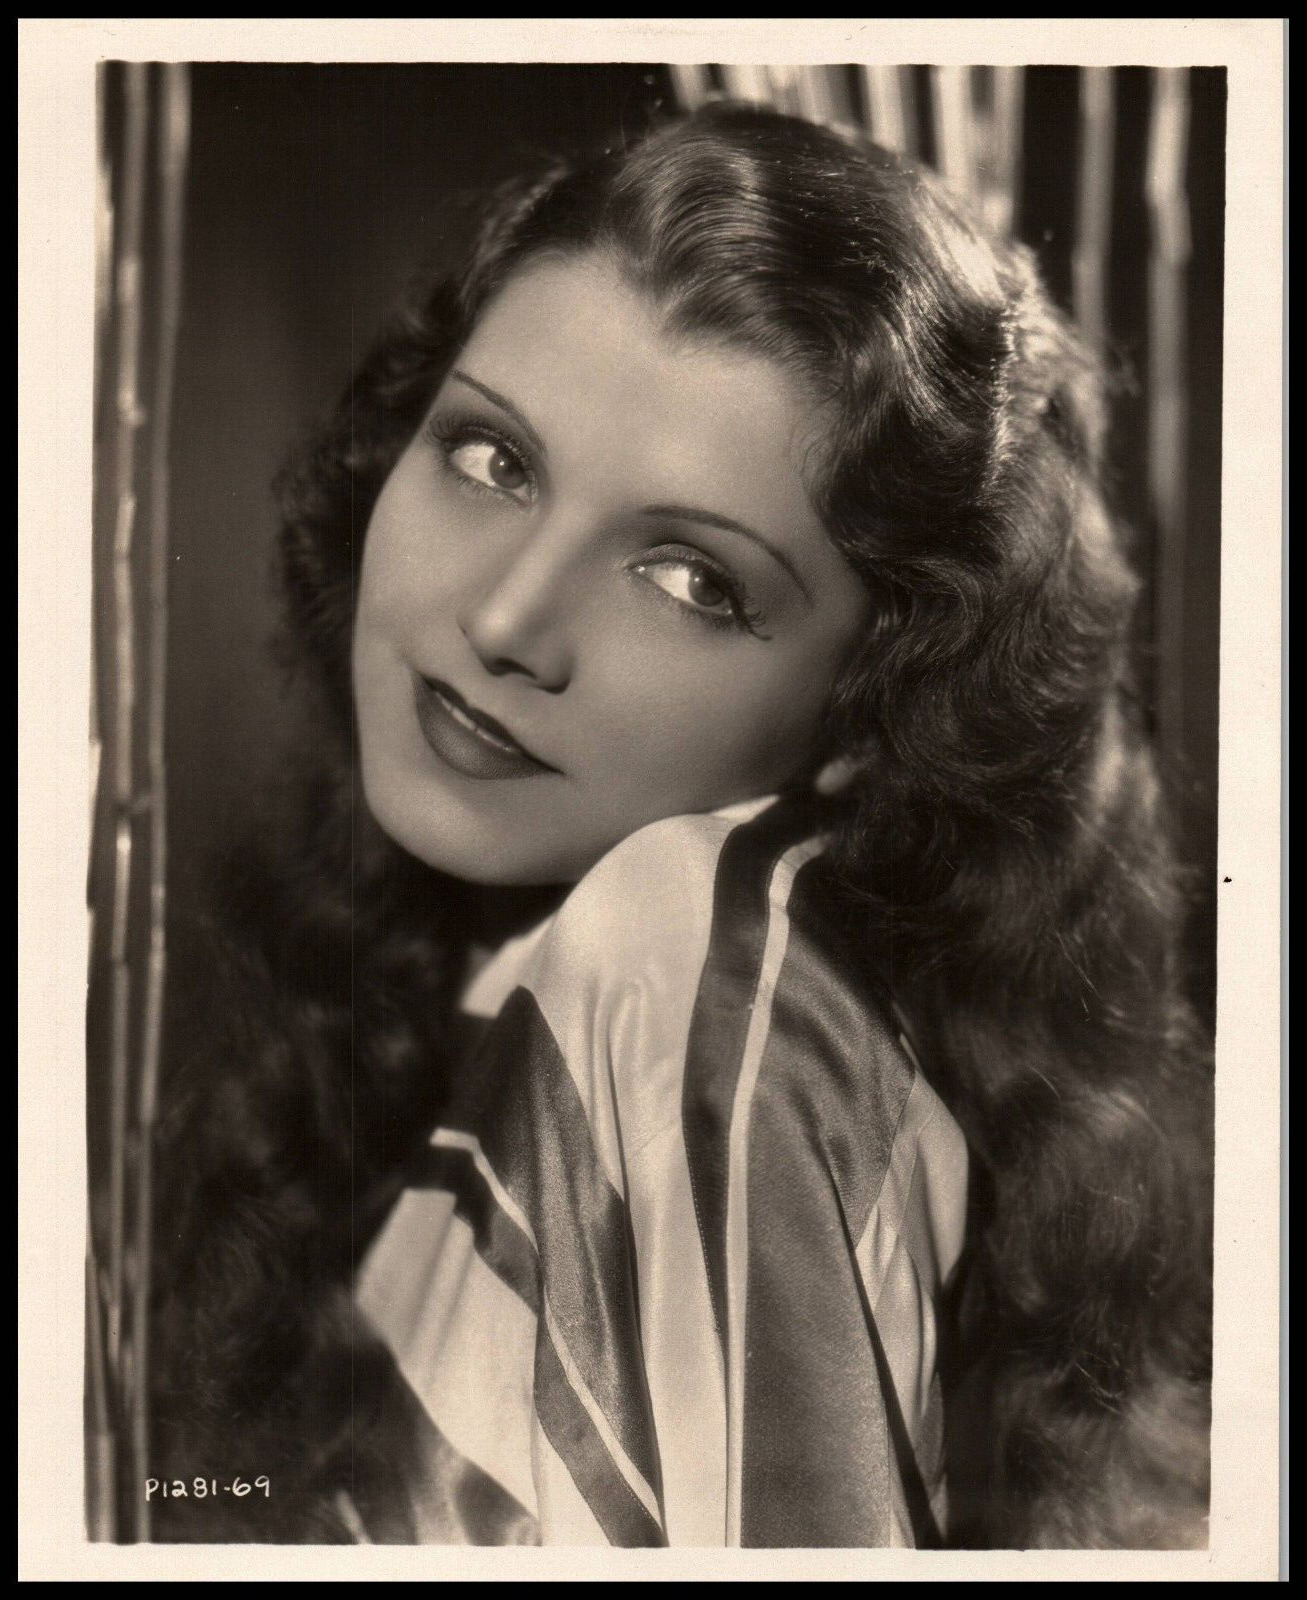 Hollywood Beauty PEGGY SHANNON STYLISH POSE 1930s STUNNING PORTRAIT Photo 746